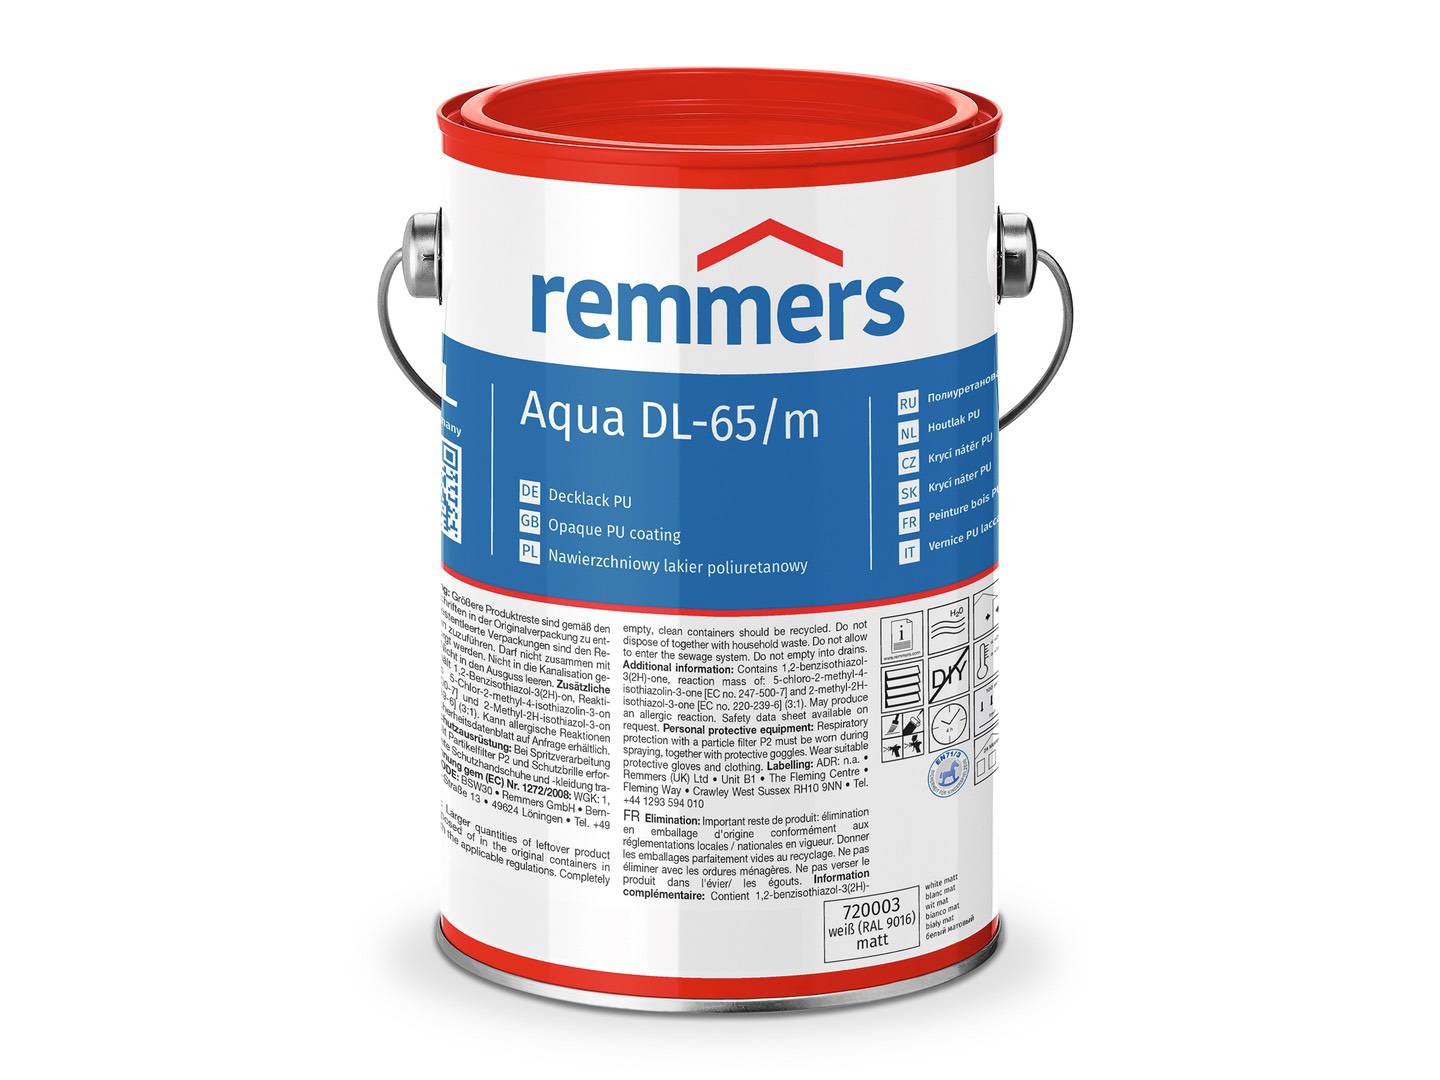 REMMERS Aqua DL-65-Decklack PU weiß (RAL 9016) seidenglänzend 0,75 l